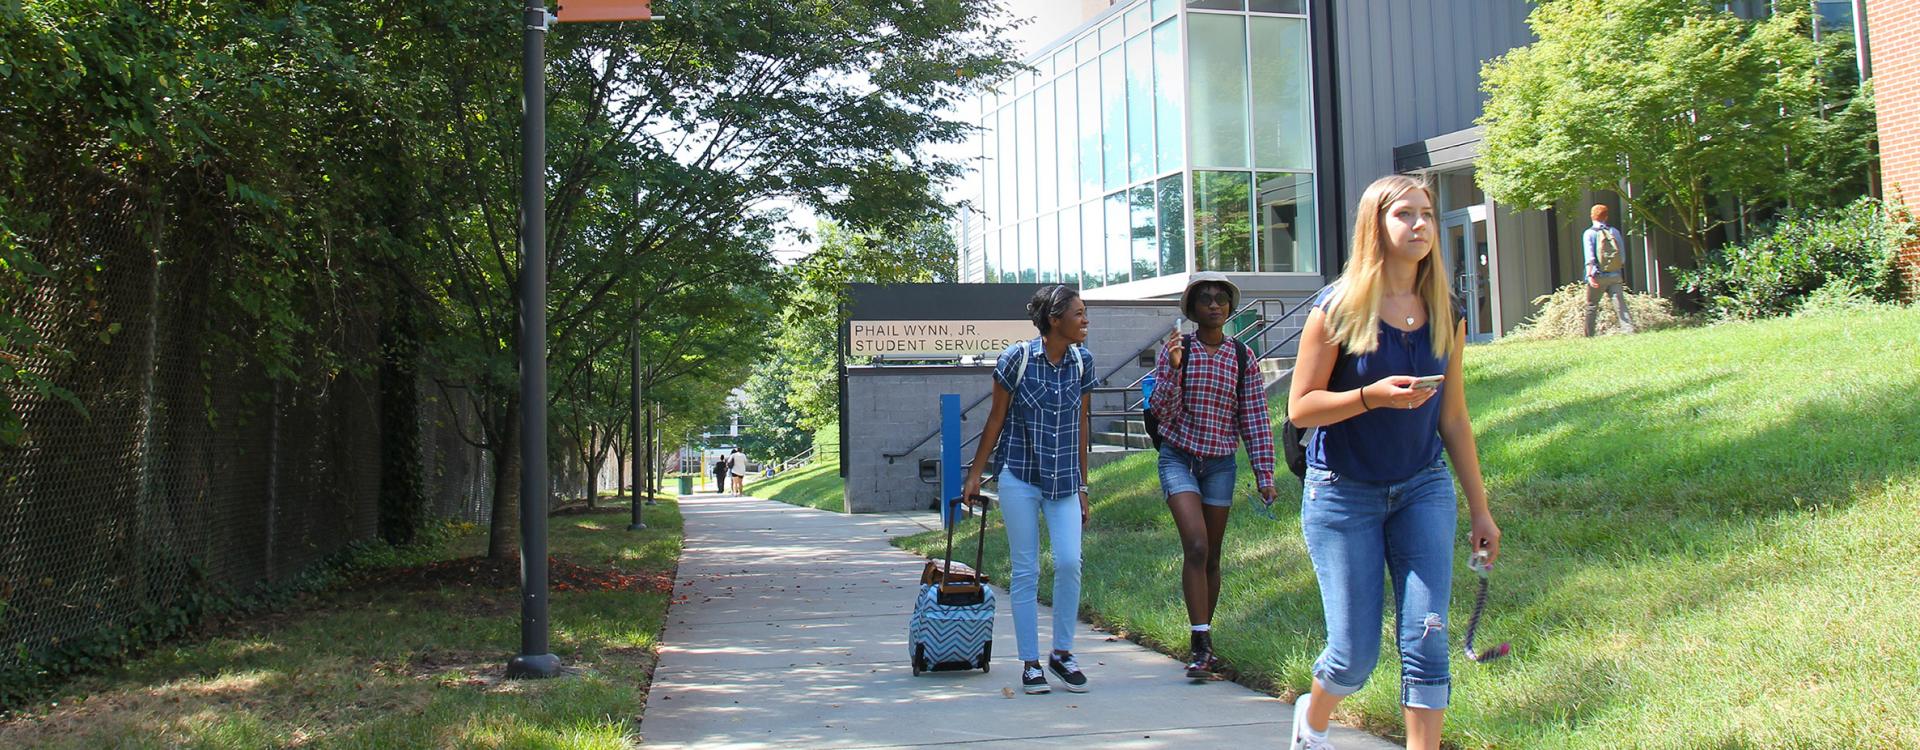 Three students walking on sidewalk in front of Wynn Center